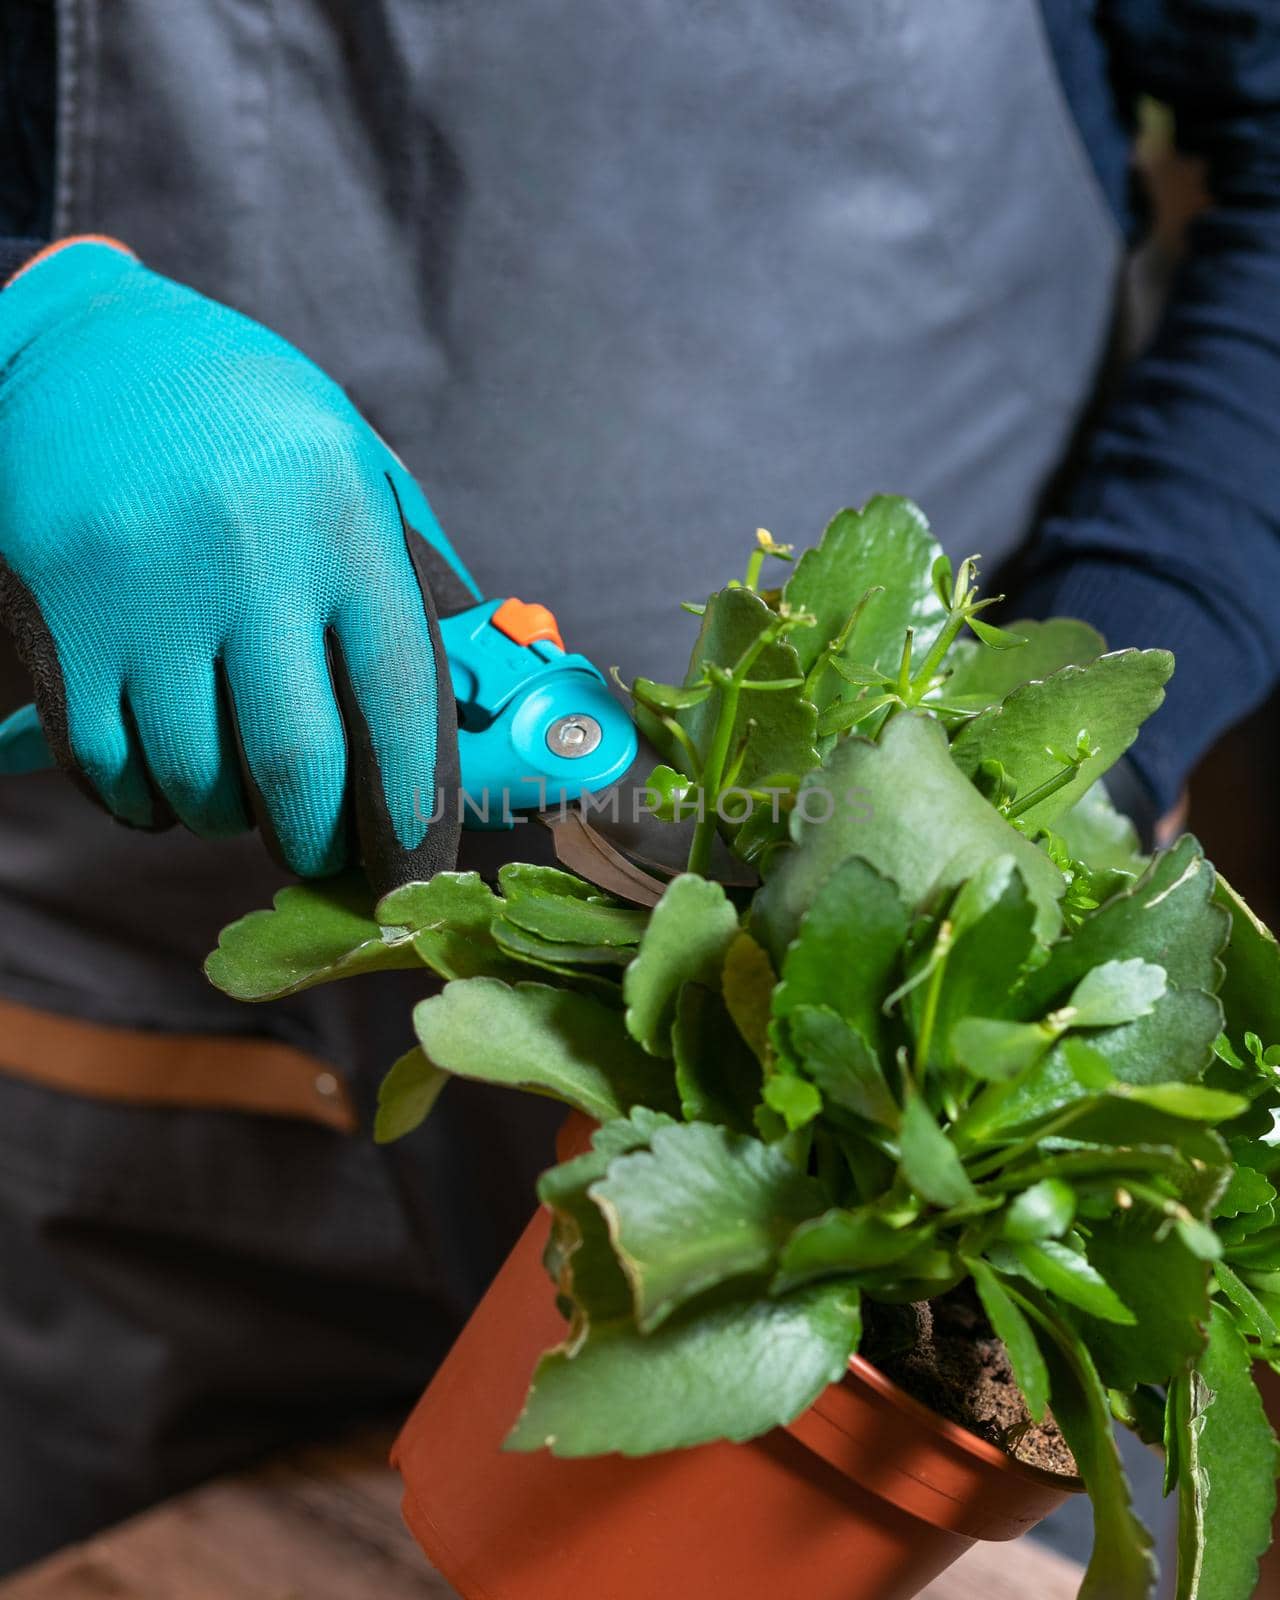 Gardener man cutting Widow's-thrill, Kalanchoe plant with garden scissors and gloves by ferhad